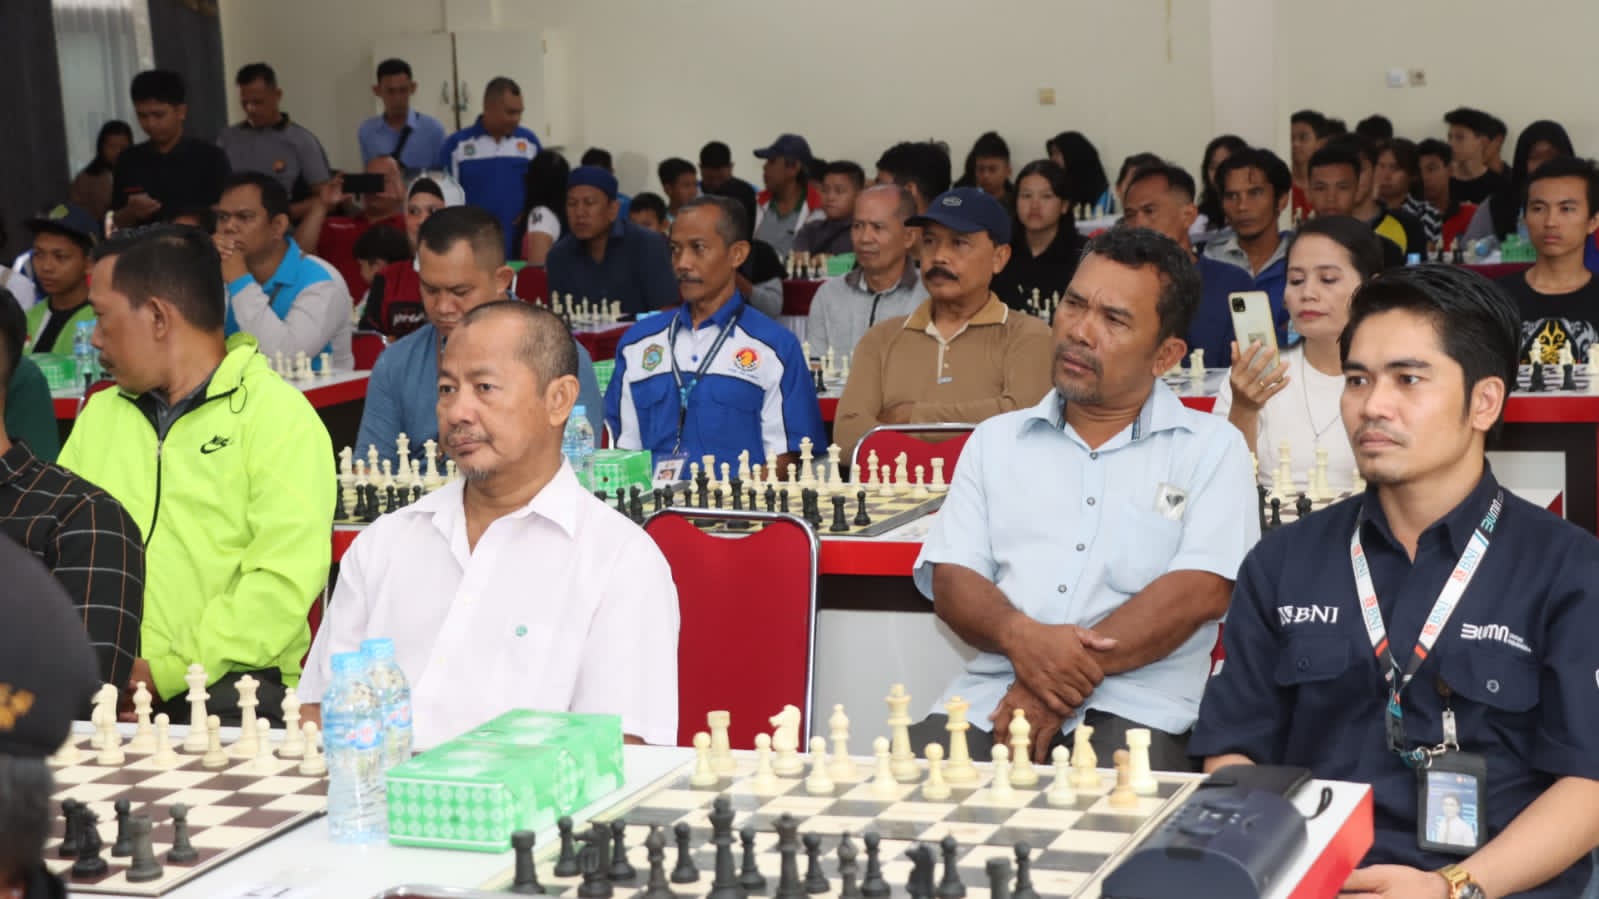 Sekadau 警察局长为所有年龄段的人举办国际象棋锦标赛，庆祝第 78 届 Bhayangkara 日 - 来源：Suarakalbar.co.id